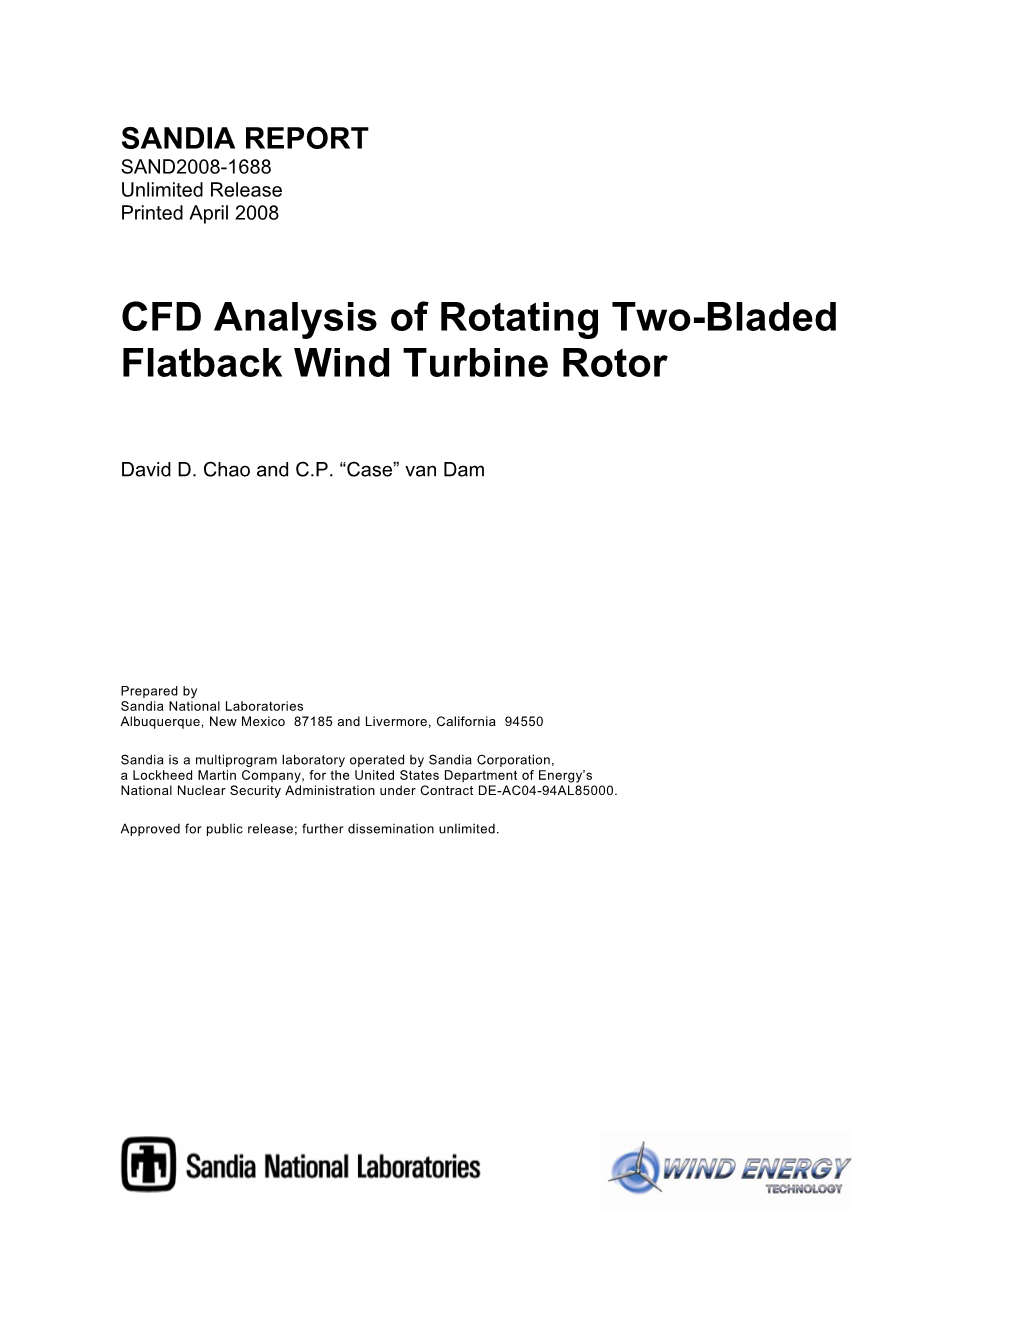 CFD Analysis of Rotating Two-Bladed Flatback Wind Turbine Rotor